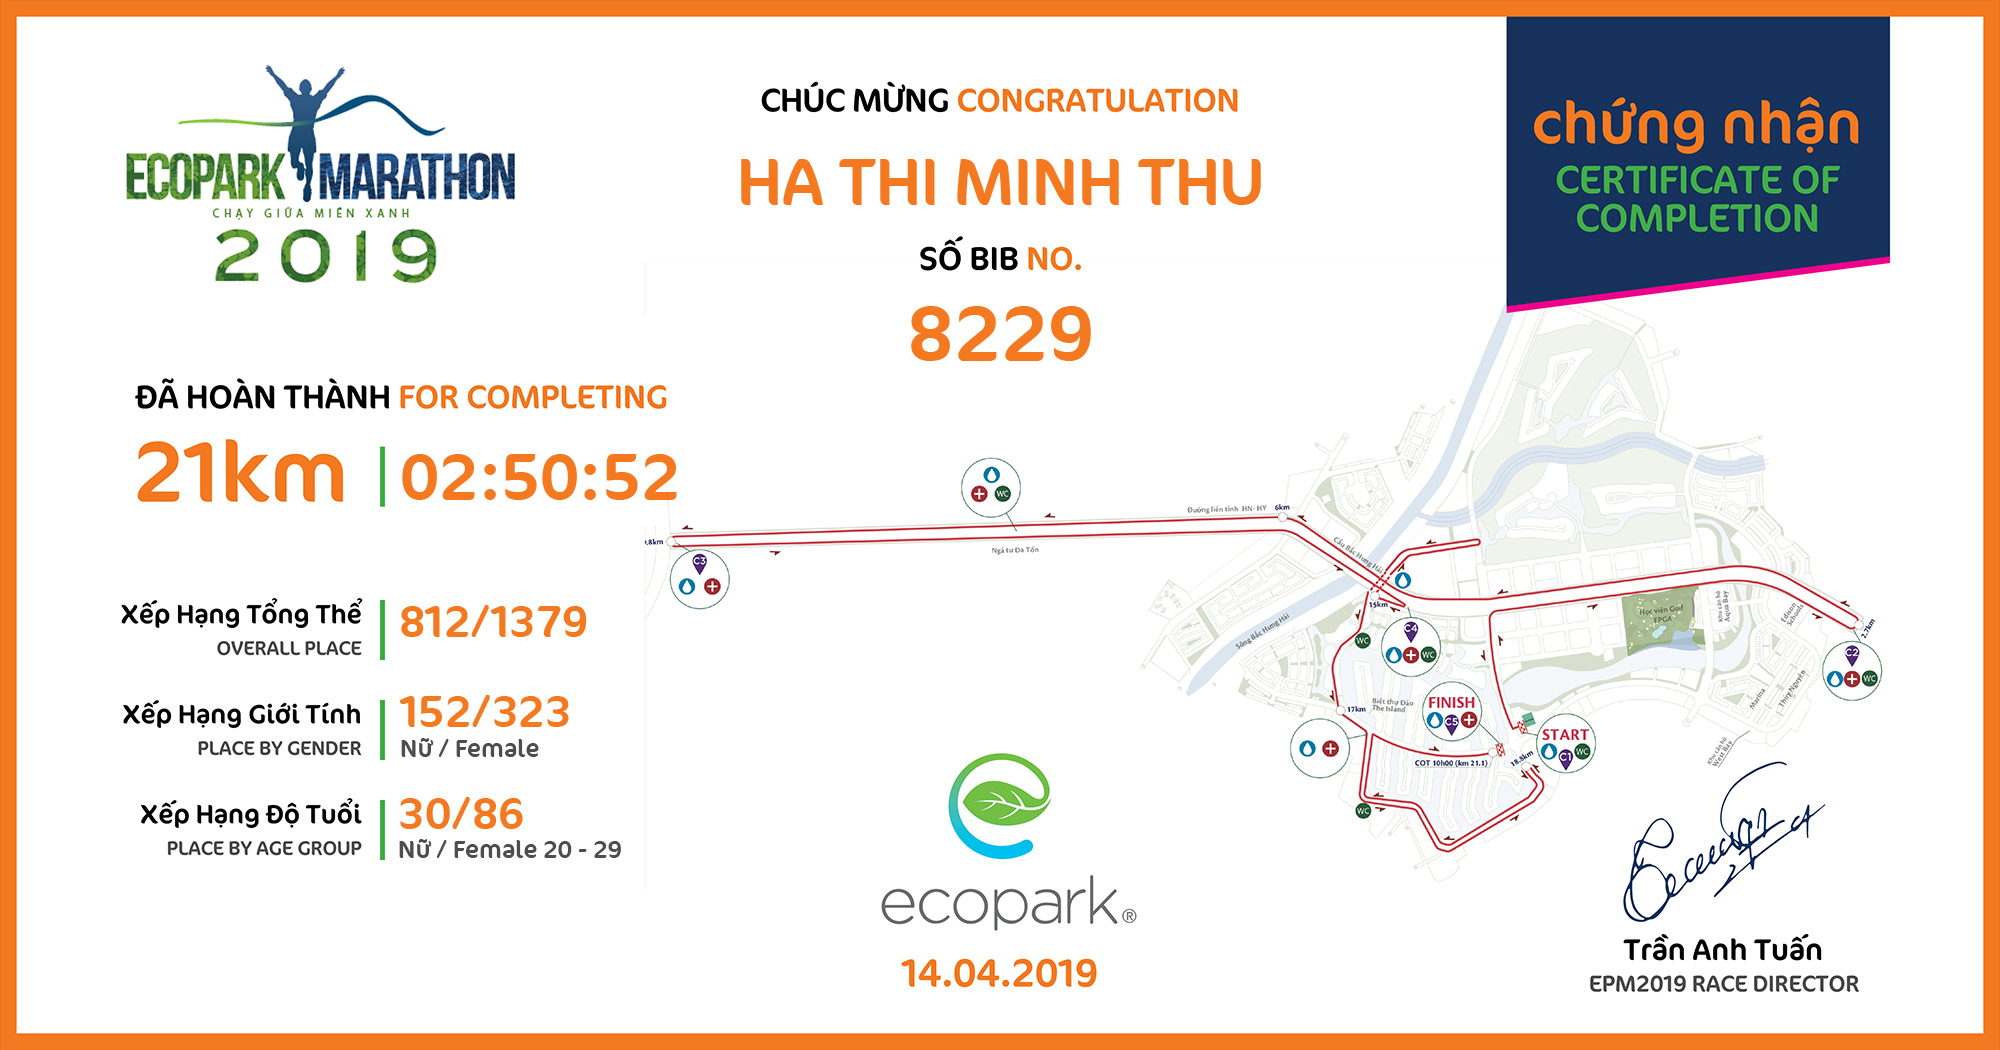 8229 - Ha Thi Minh Thu